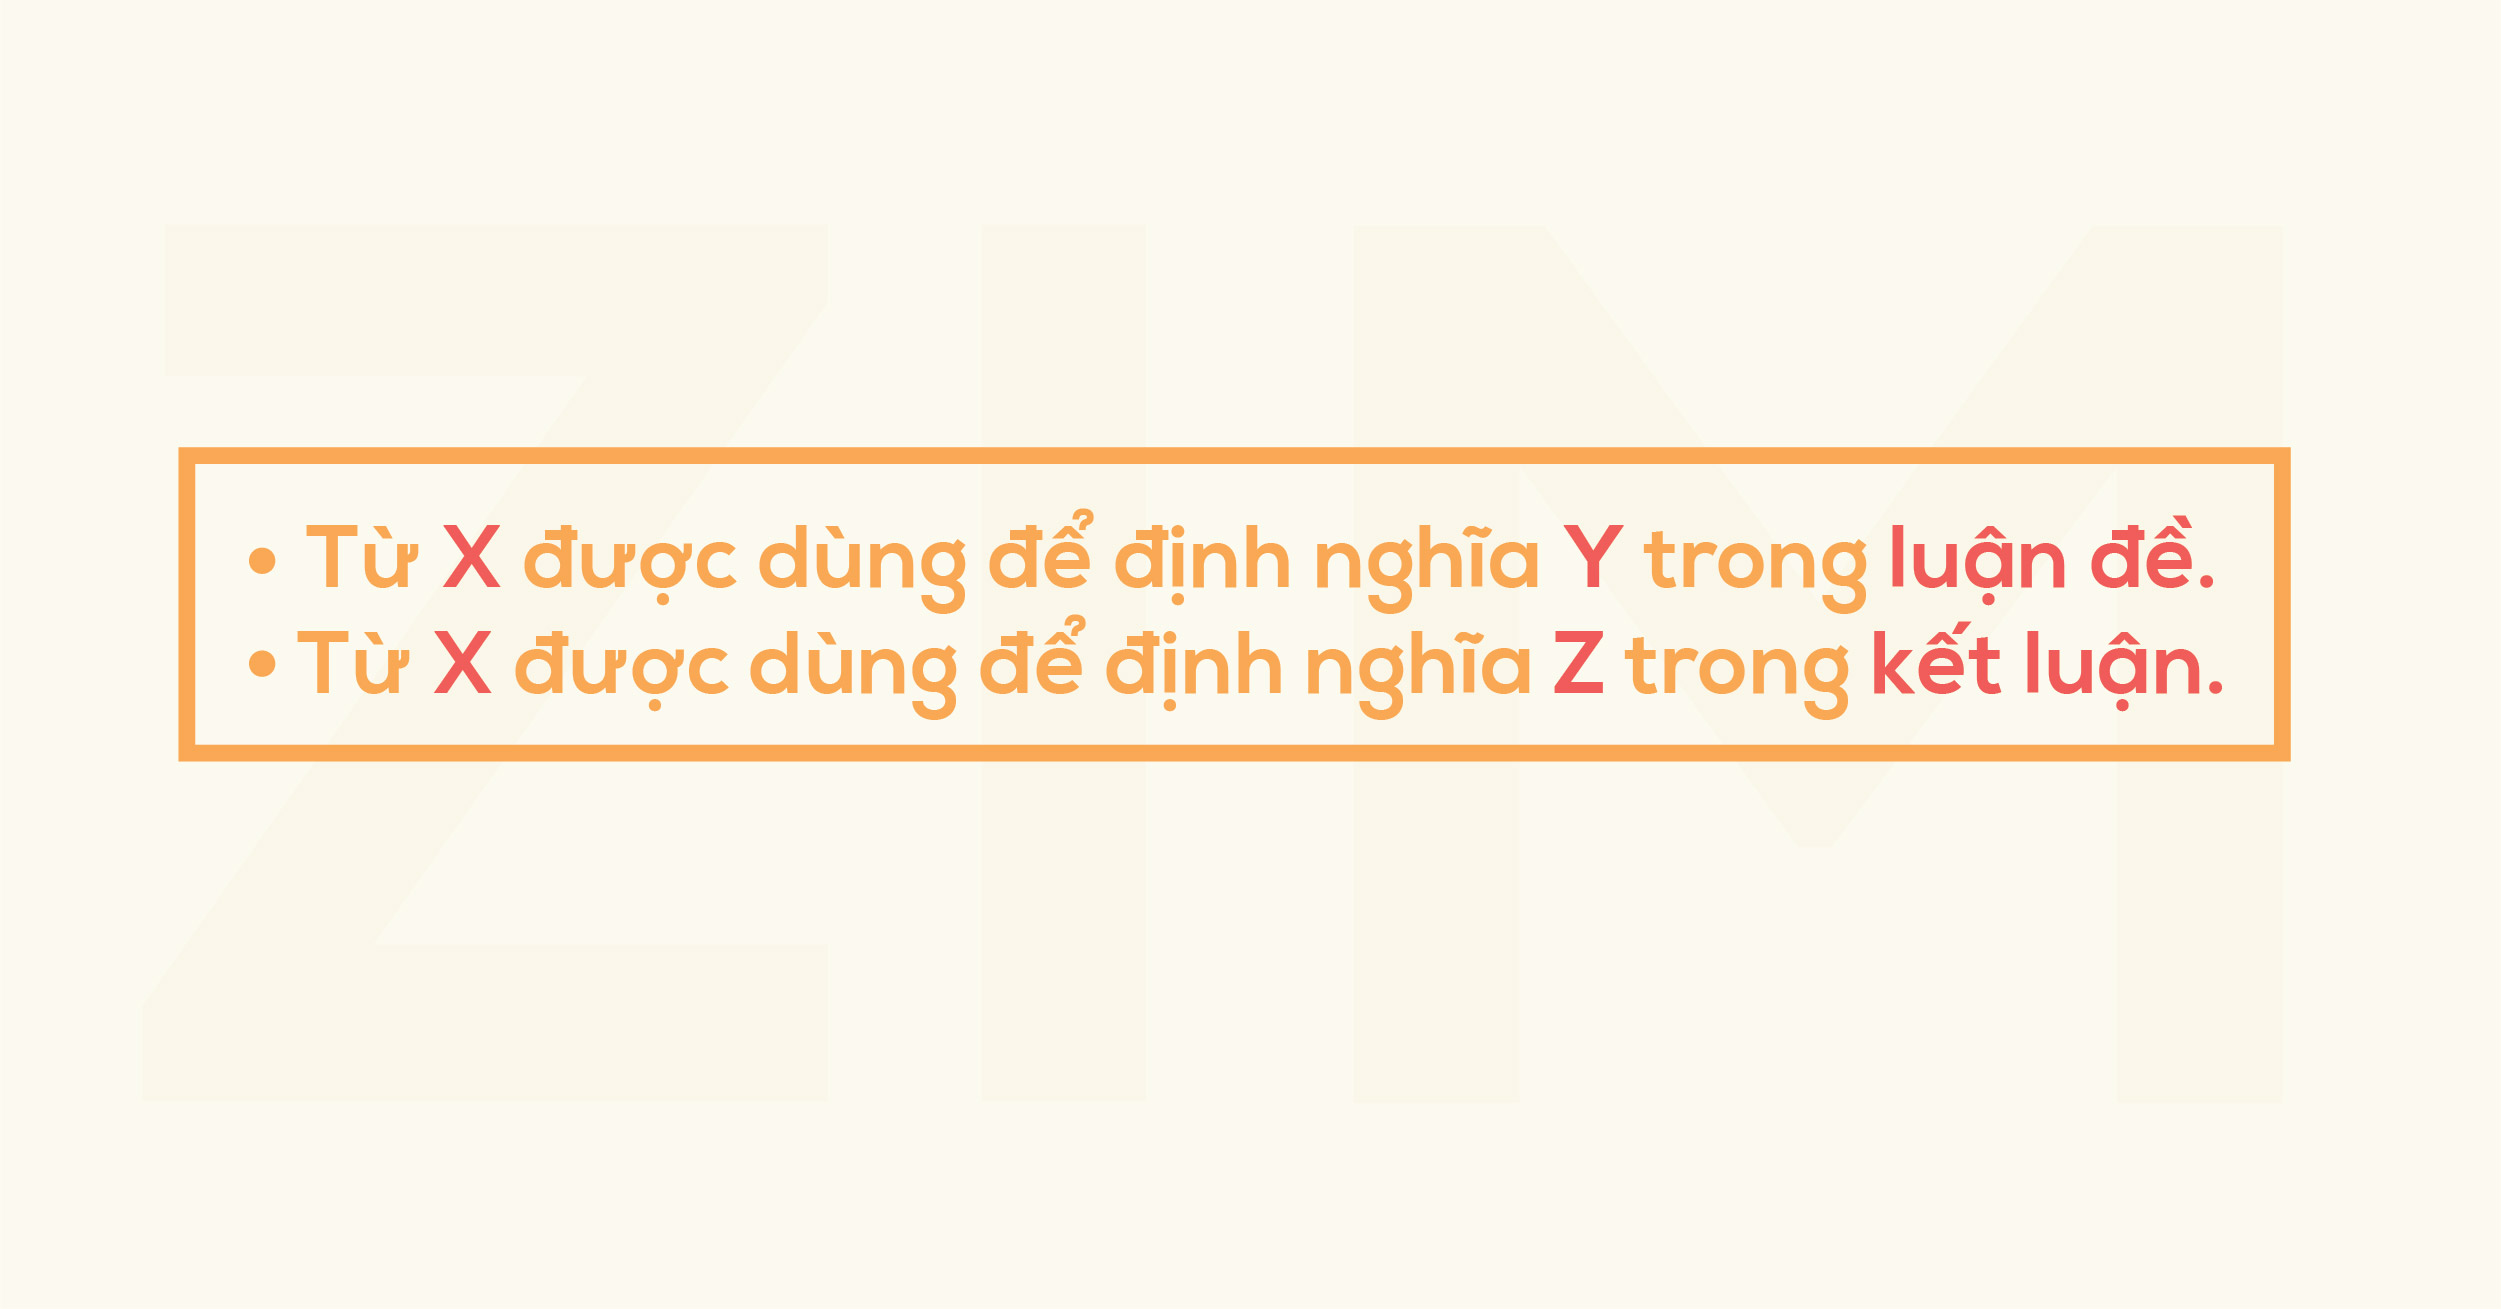 nhung-loi-logic-pho-bien-trong-ielts-writing-task-2-va-cach-khac-phuc